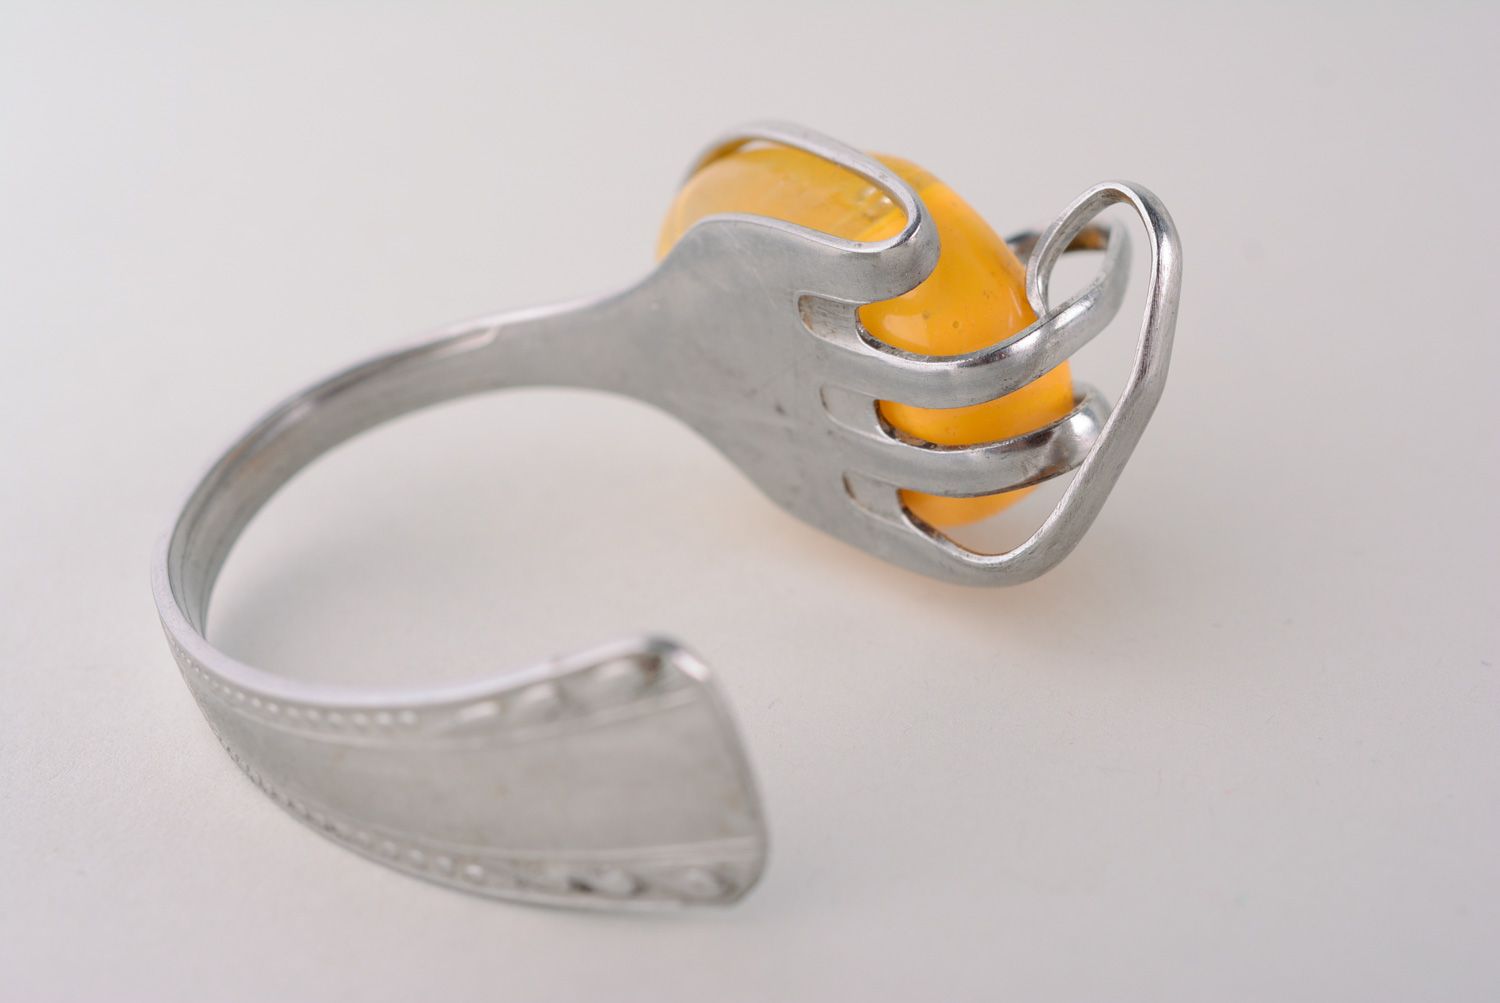 Homemade metal bracelet with yellow stone photo 4